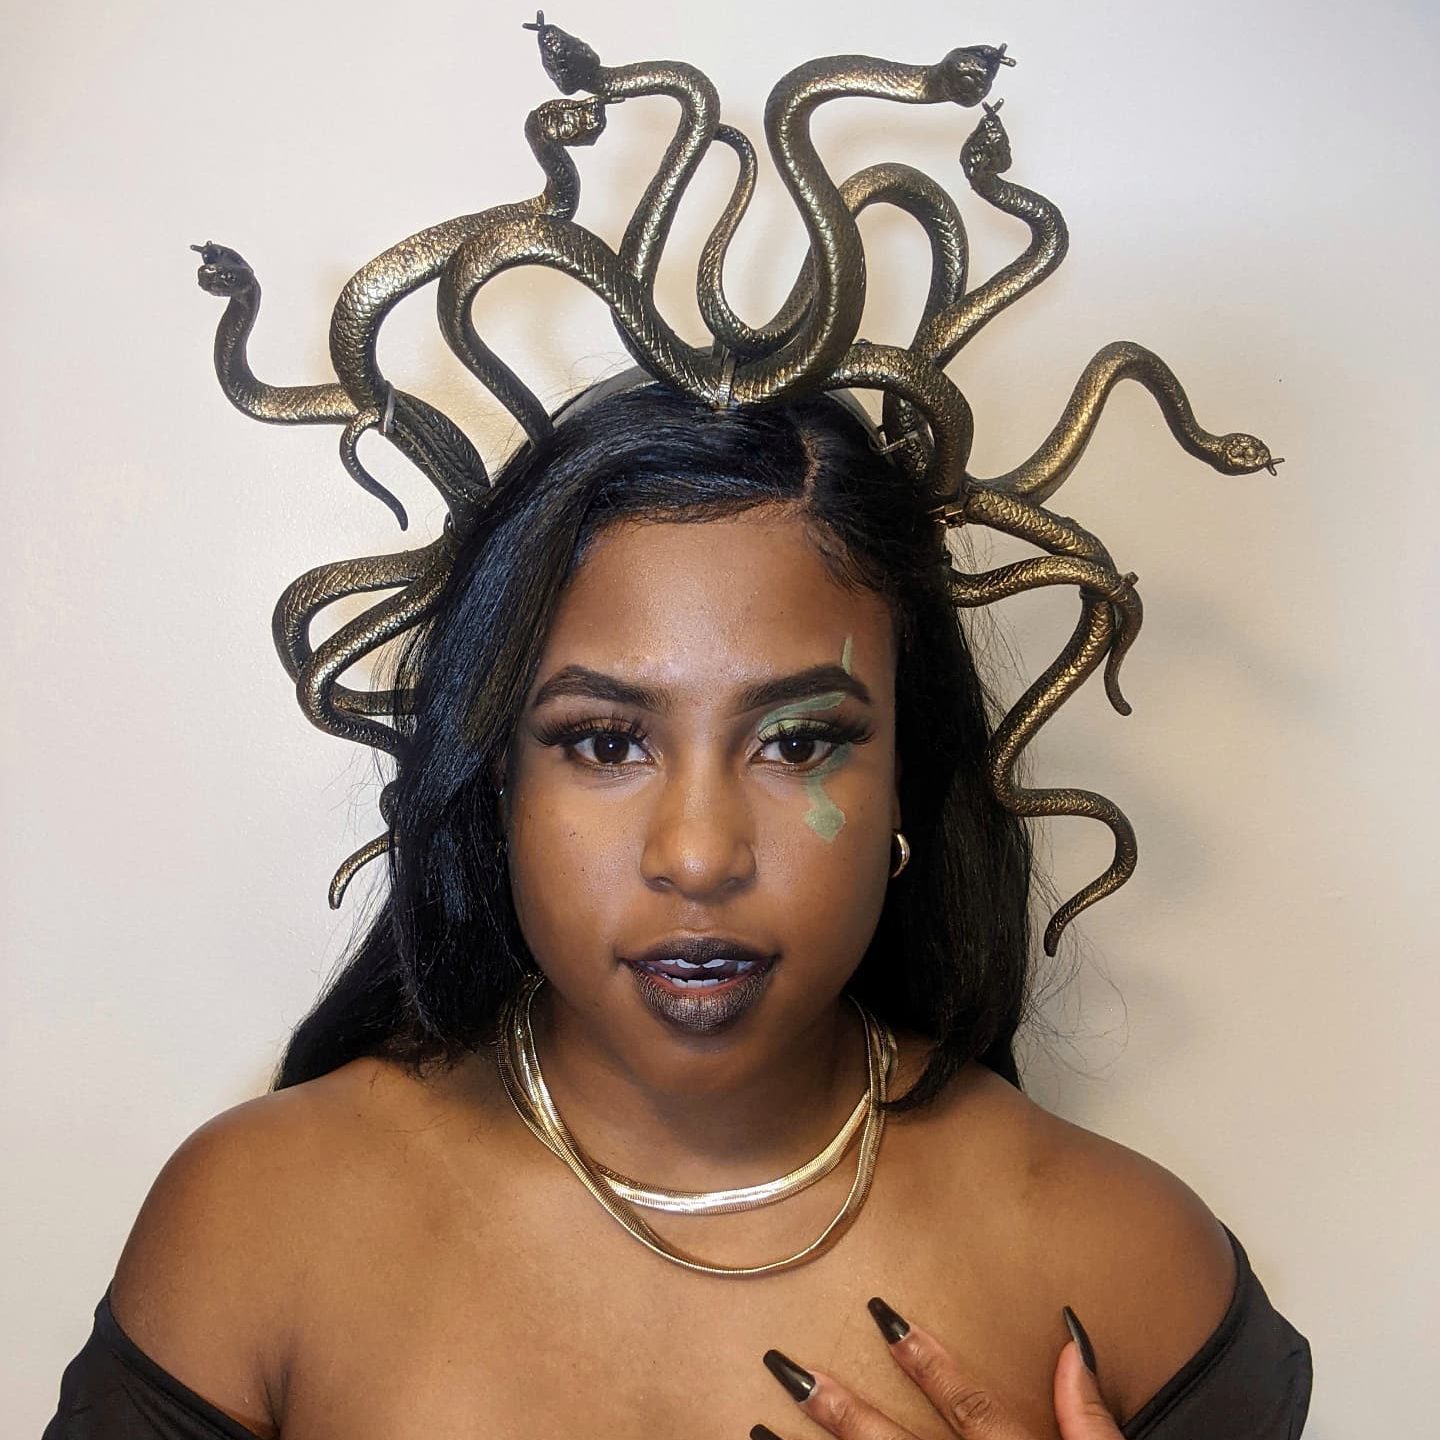 Medusa Costume Via Chasing Greatness Via Instagram